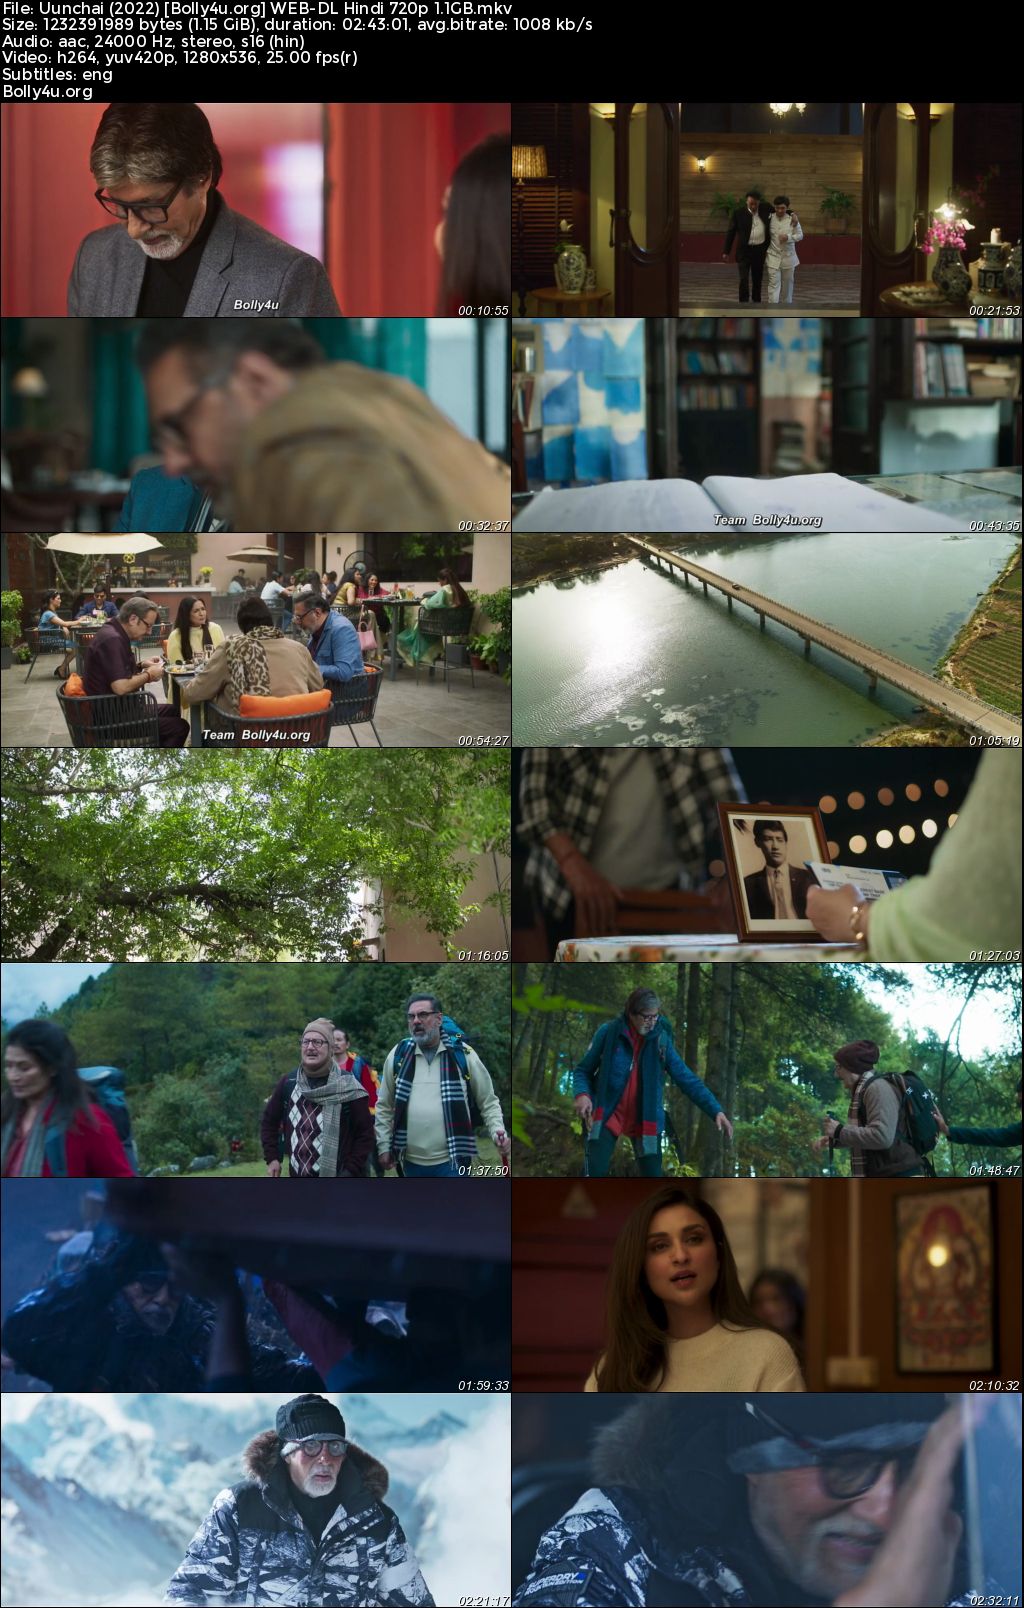 Uunchai 2022 WEB-DL Hindi Full Movie Download 1080p 720p 480p